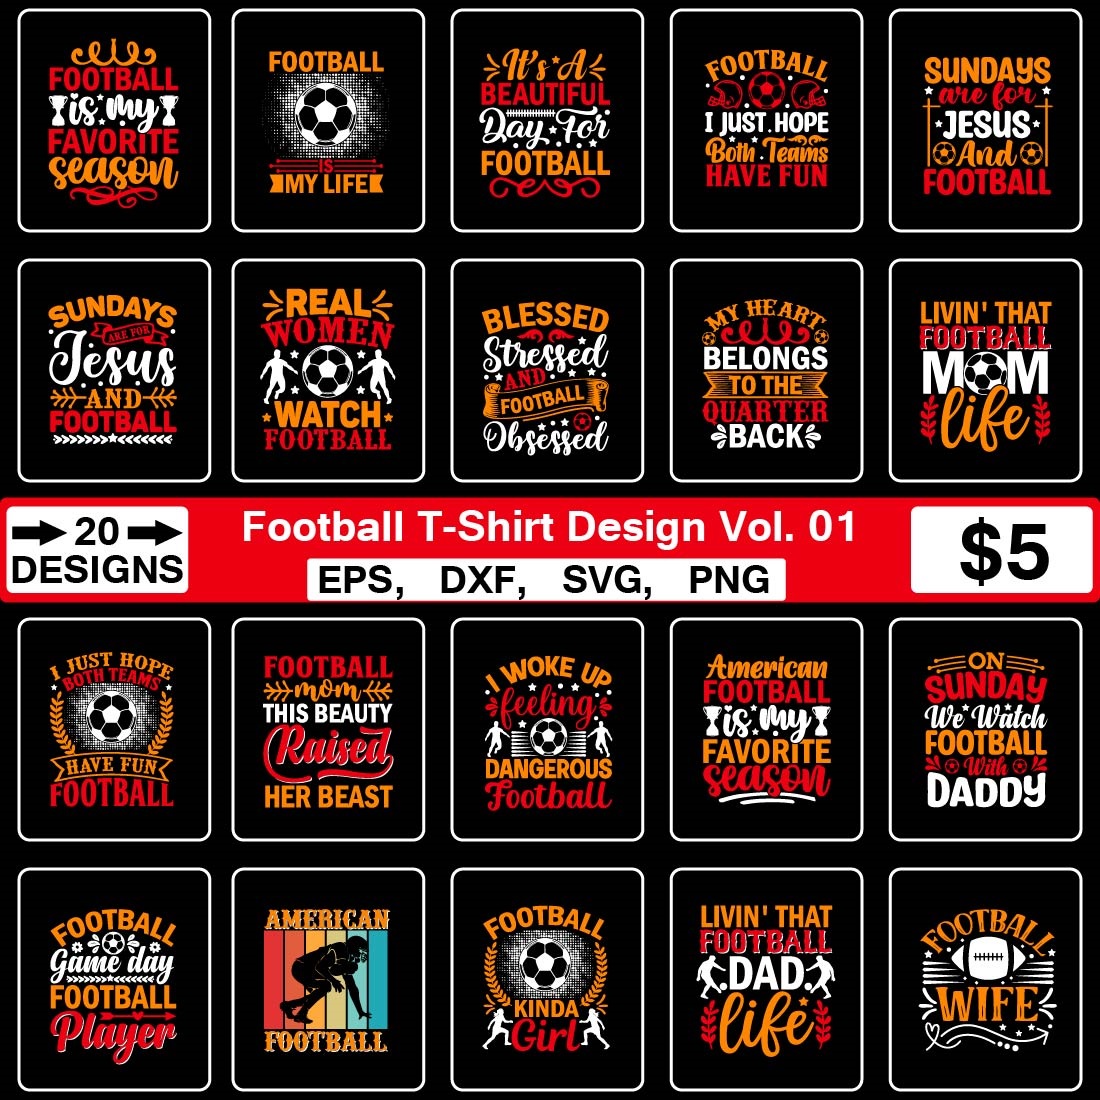 Football T-Shirt Design Bundle cover image.